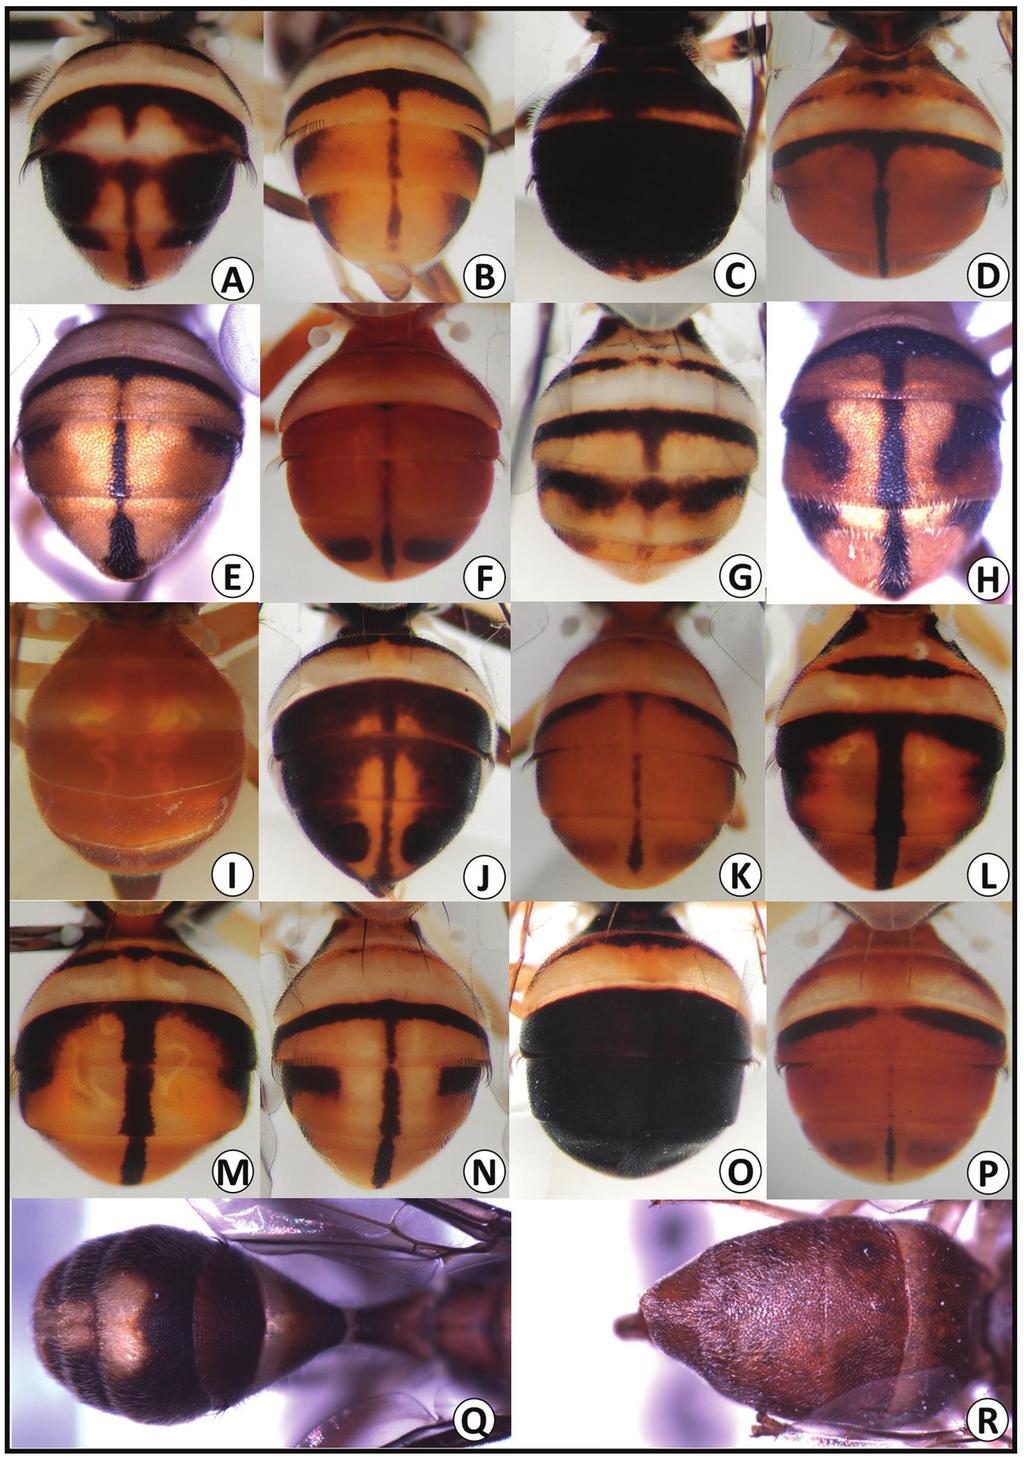 38 Leblanc et al. Figure 4. Abdomen color patterns for Bactrocera bogorensis (A), B. caudata (B), B. cilifera (C), B. correcta (D), B. cucurbitae (E), B. digressa (F), B. diversa (G), B.